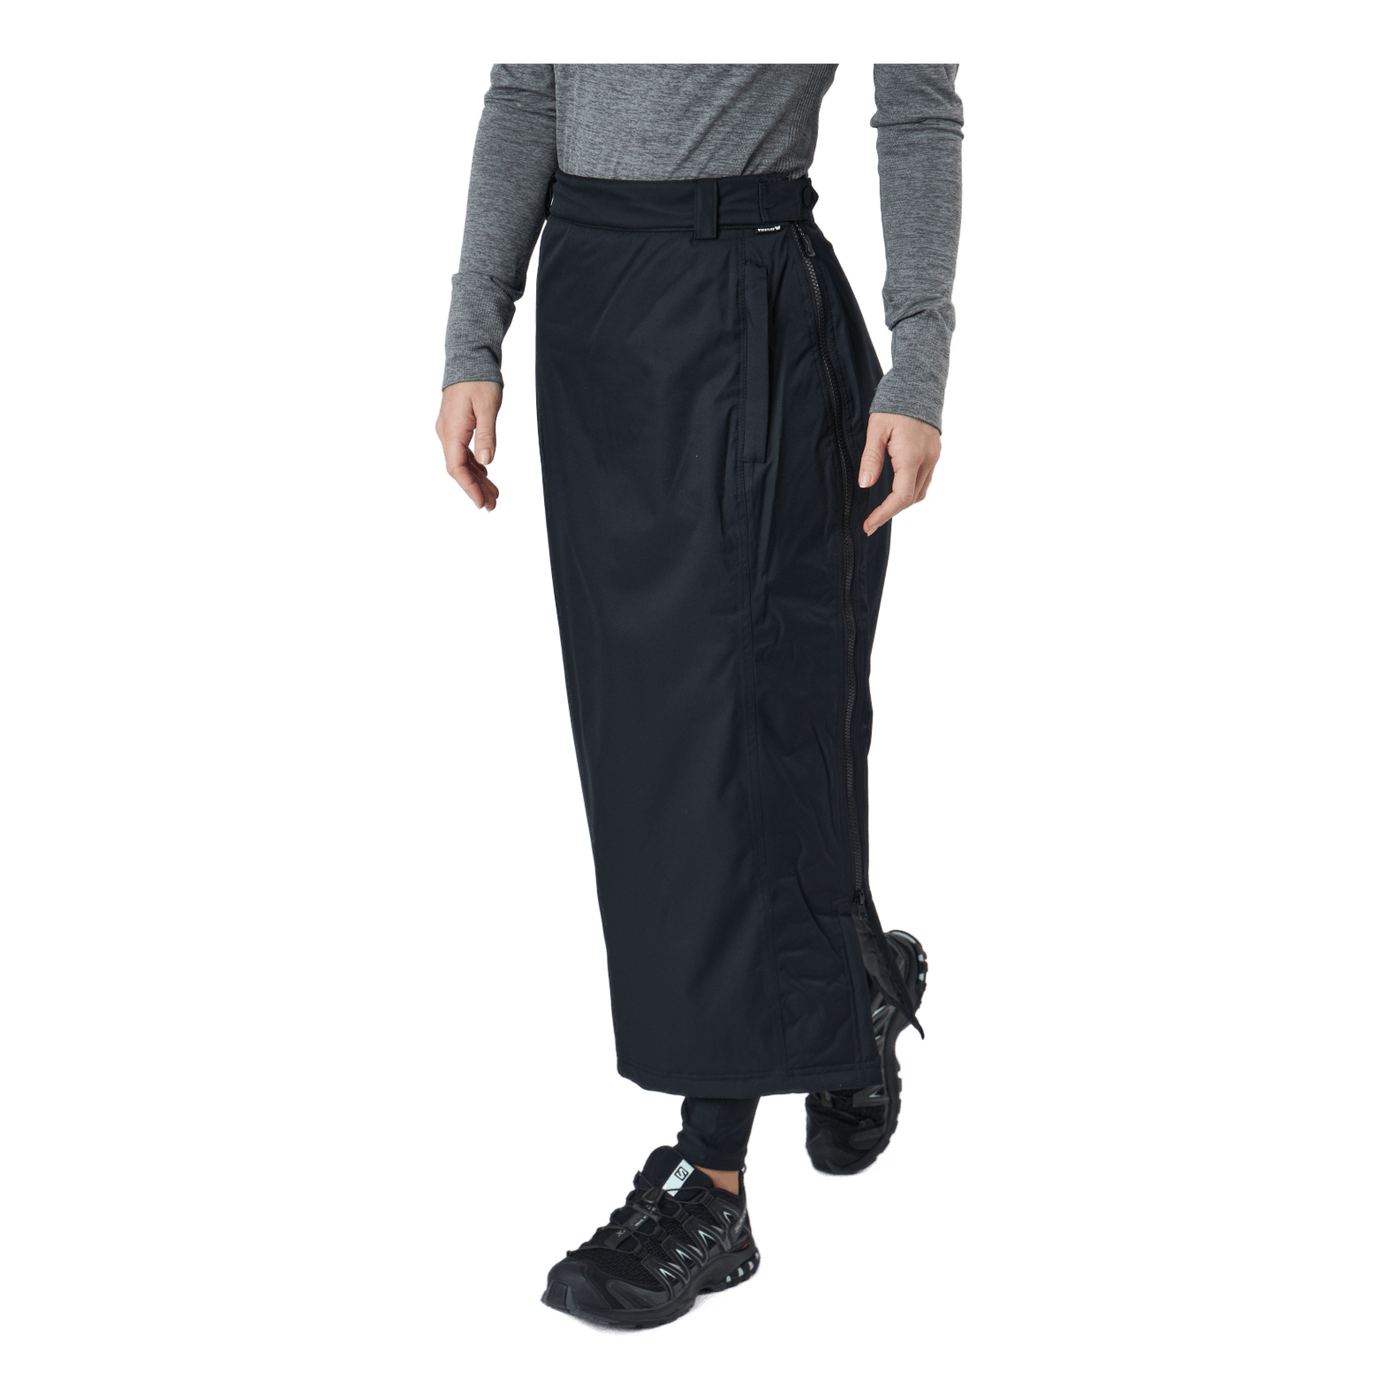 Franny W Insulated Skirt Black